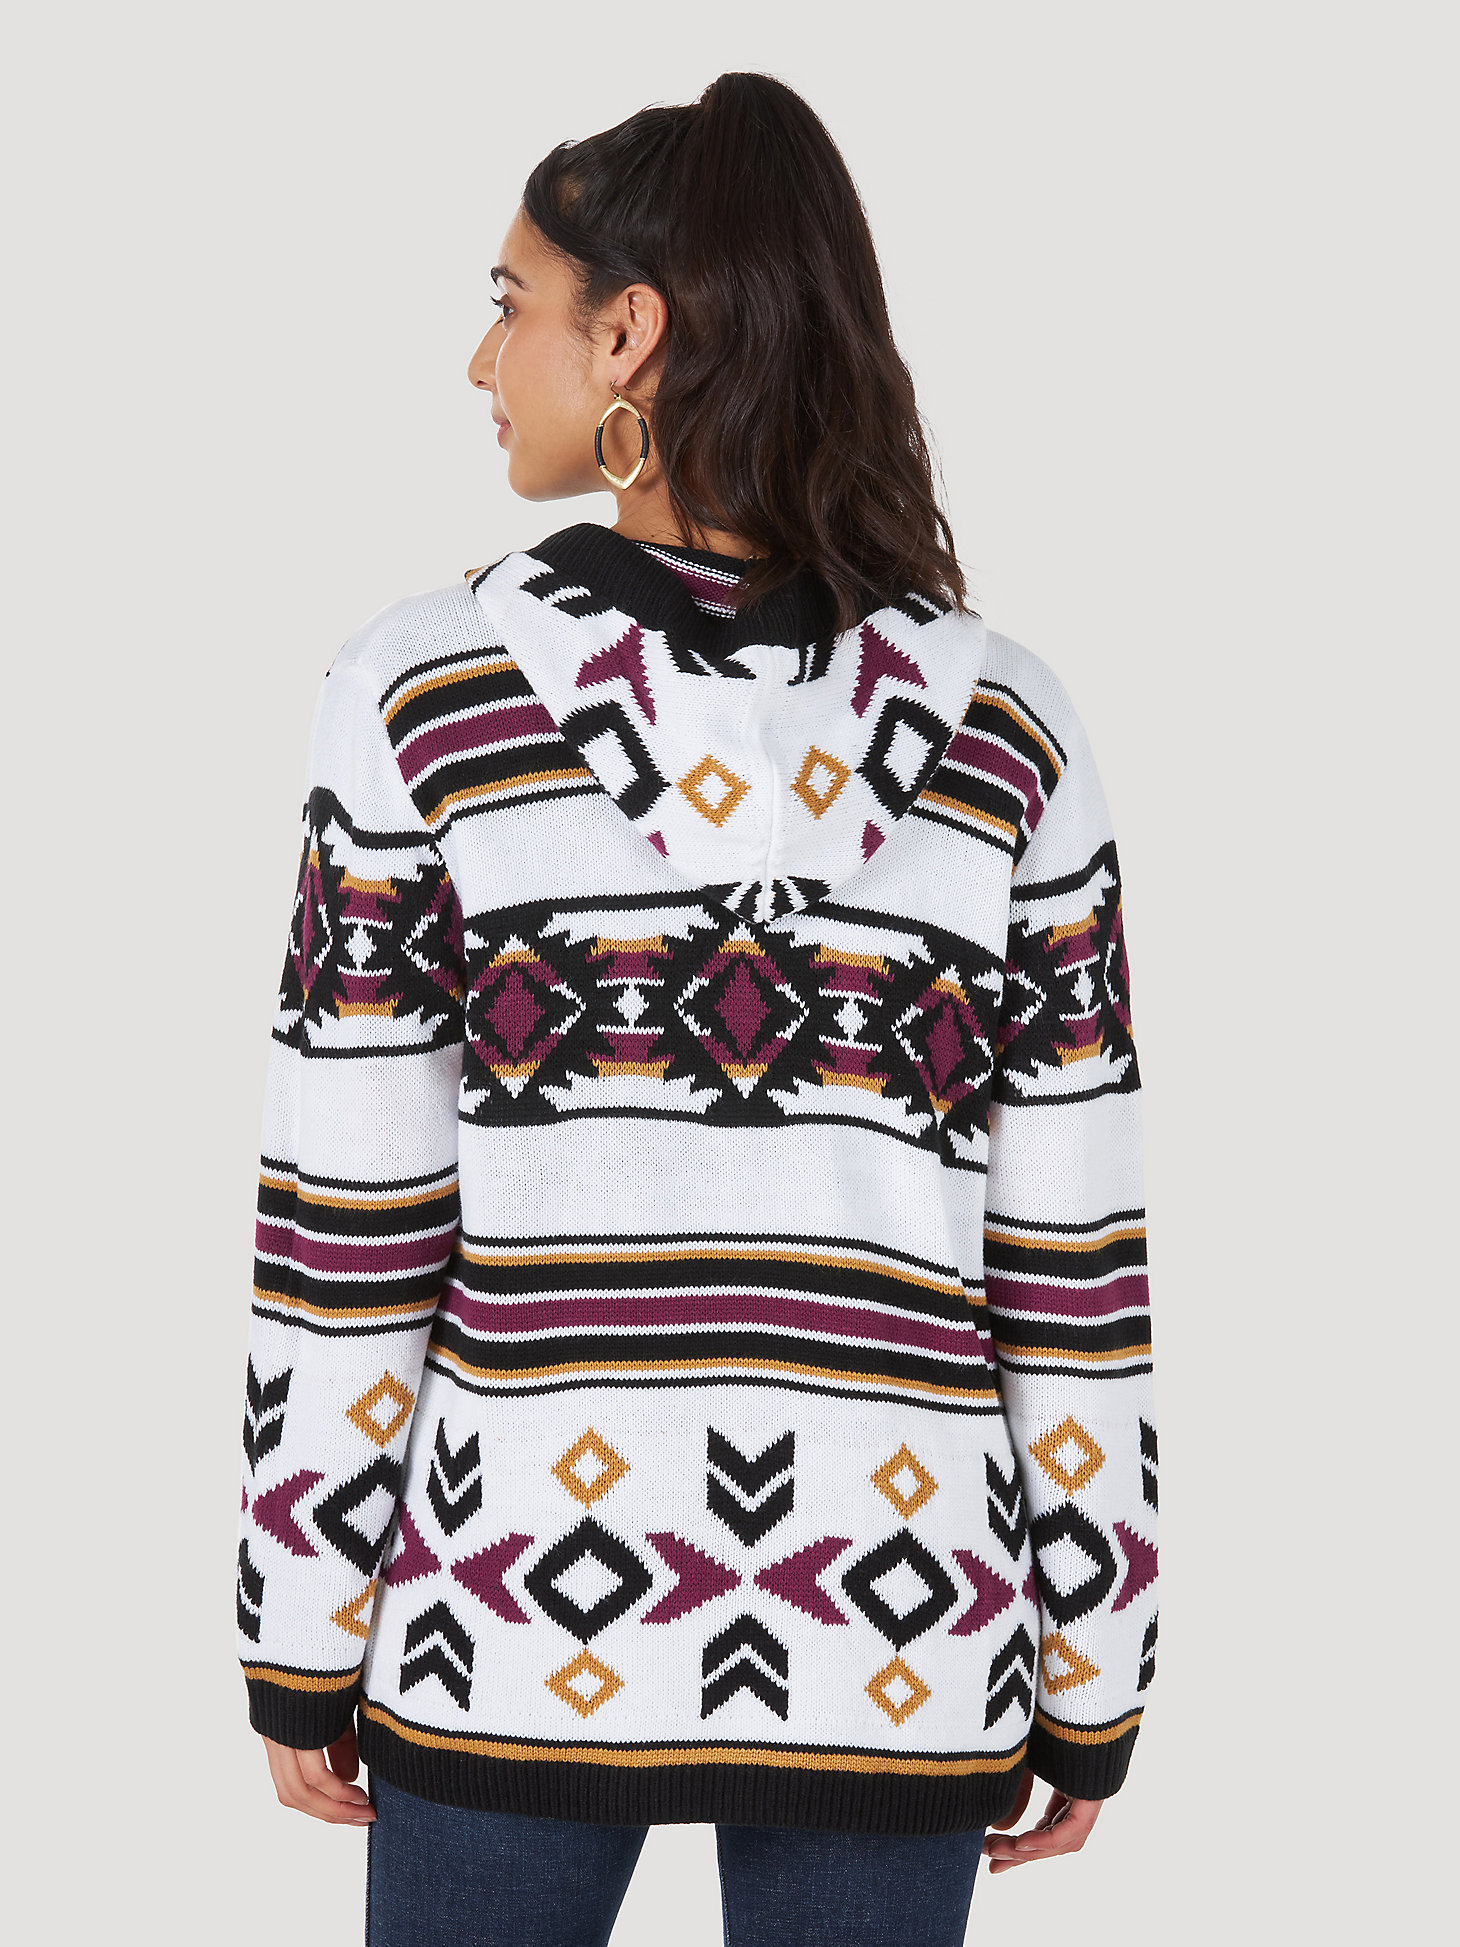 Women's Wrangler Retro® Long Sleeve Southwestern Print Cardigan Sweater in Multi alternative view 1